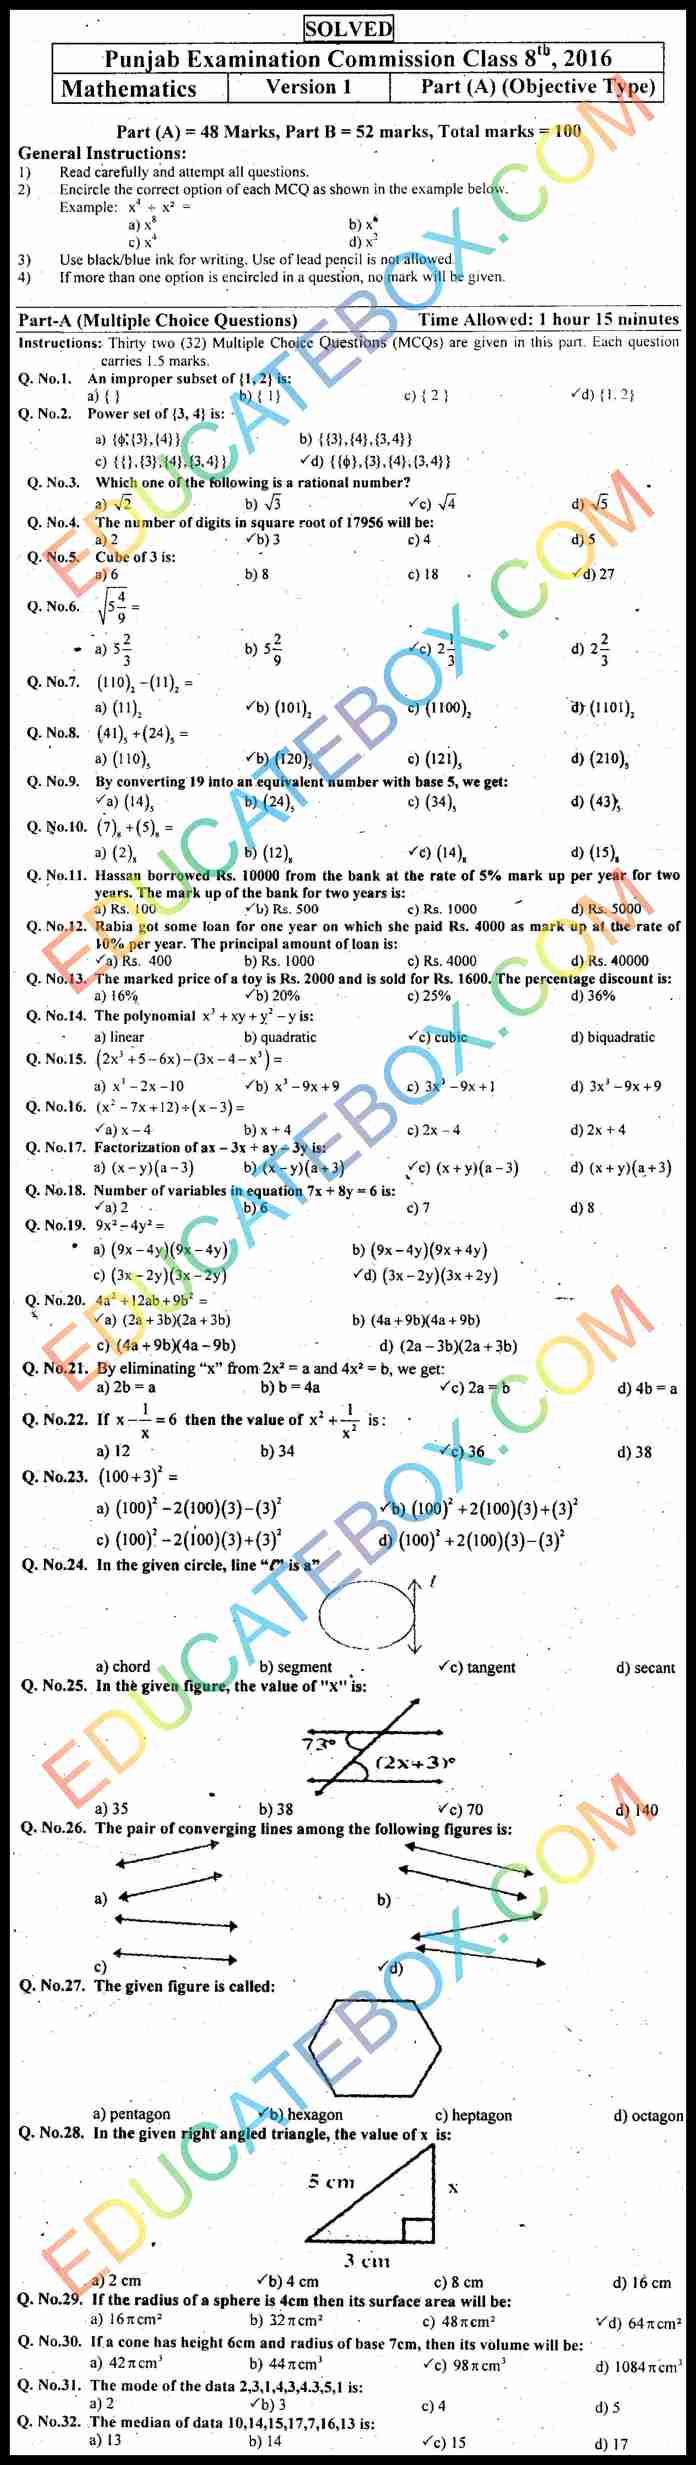 Past Paper 8th Class Maths 2016 Solved Paper Punjab Board (PEC) Objective Type English Medium Version 1 اپ ٹو ڈیٹ پیپرایٹت کلاس میتھ سولڈ پیپر پنجاب بورڈ اوبجیکٹیو ٹائپ انگلش میڈیم ورژن 1